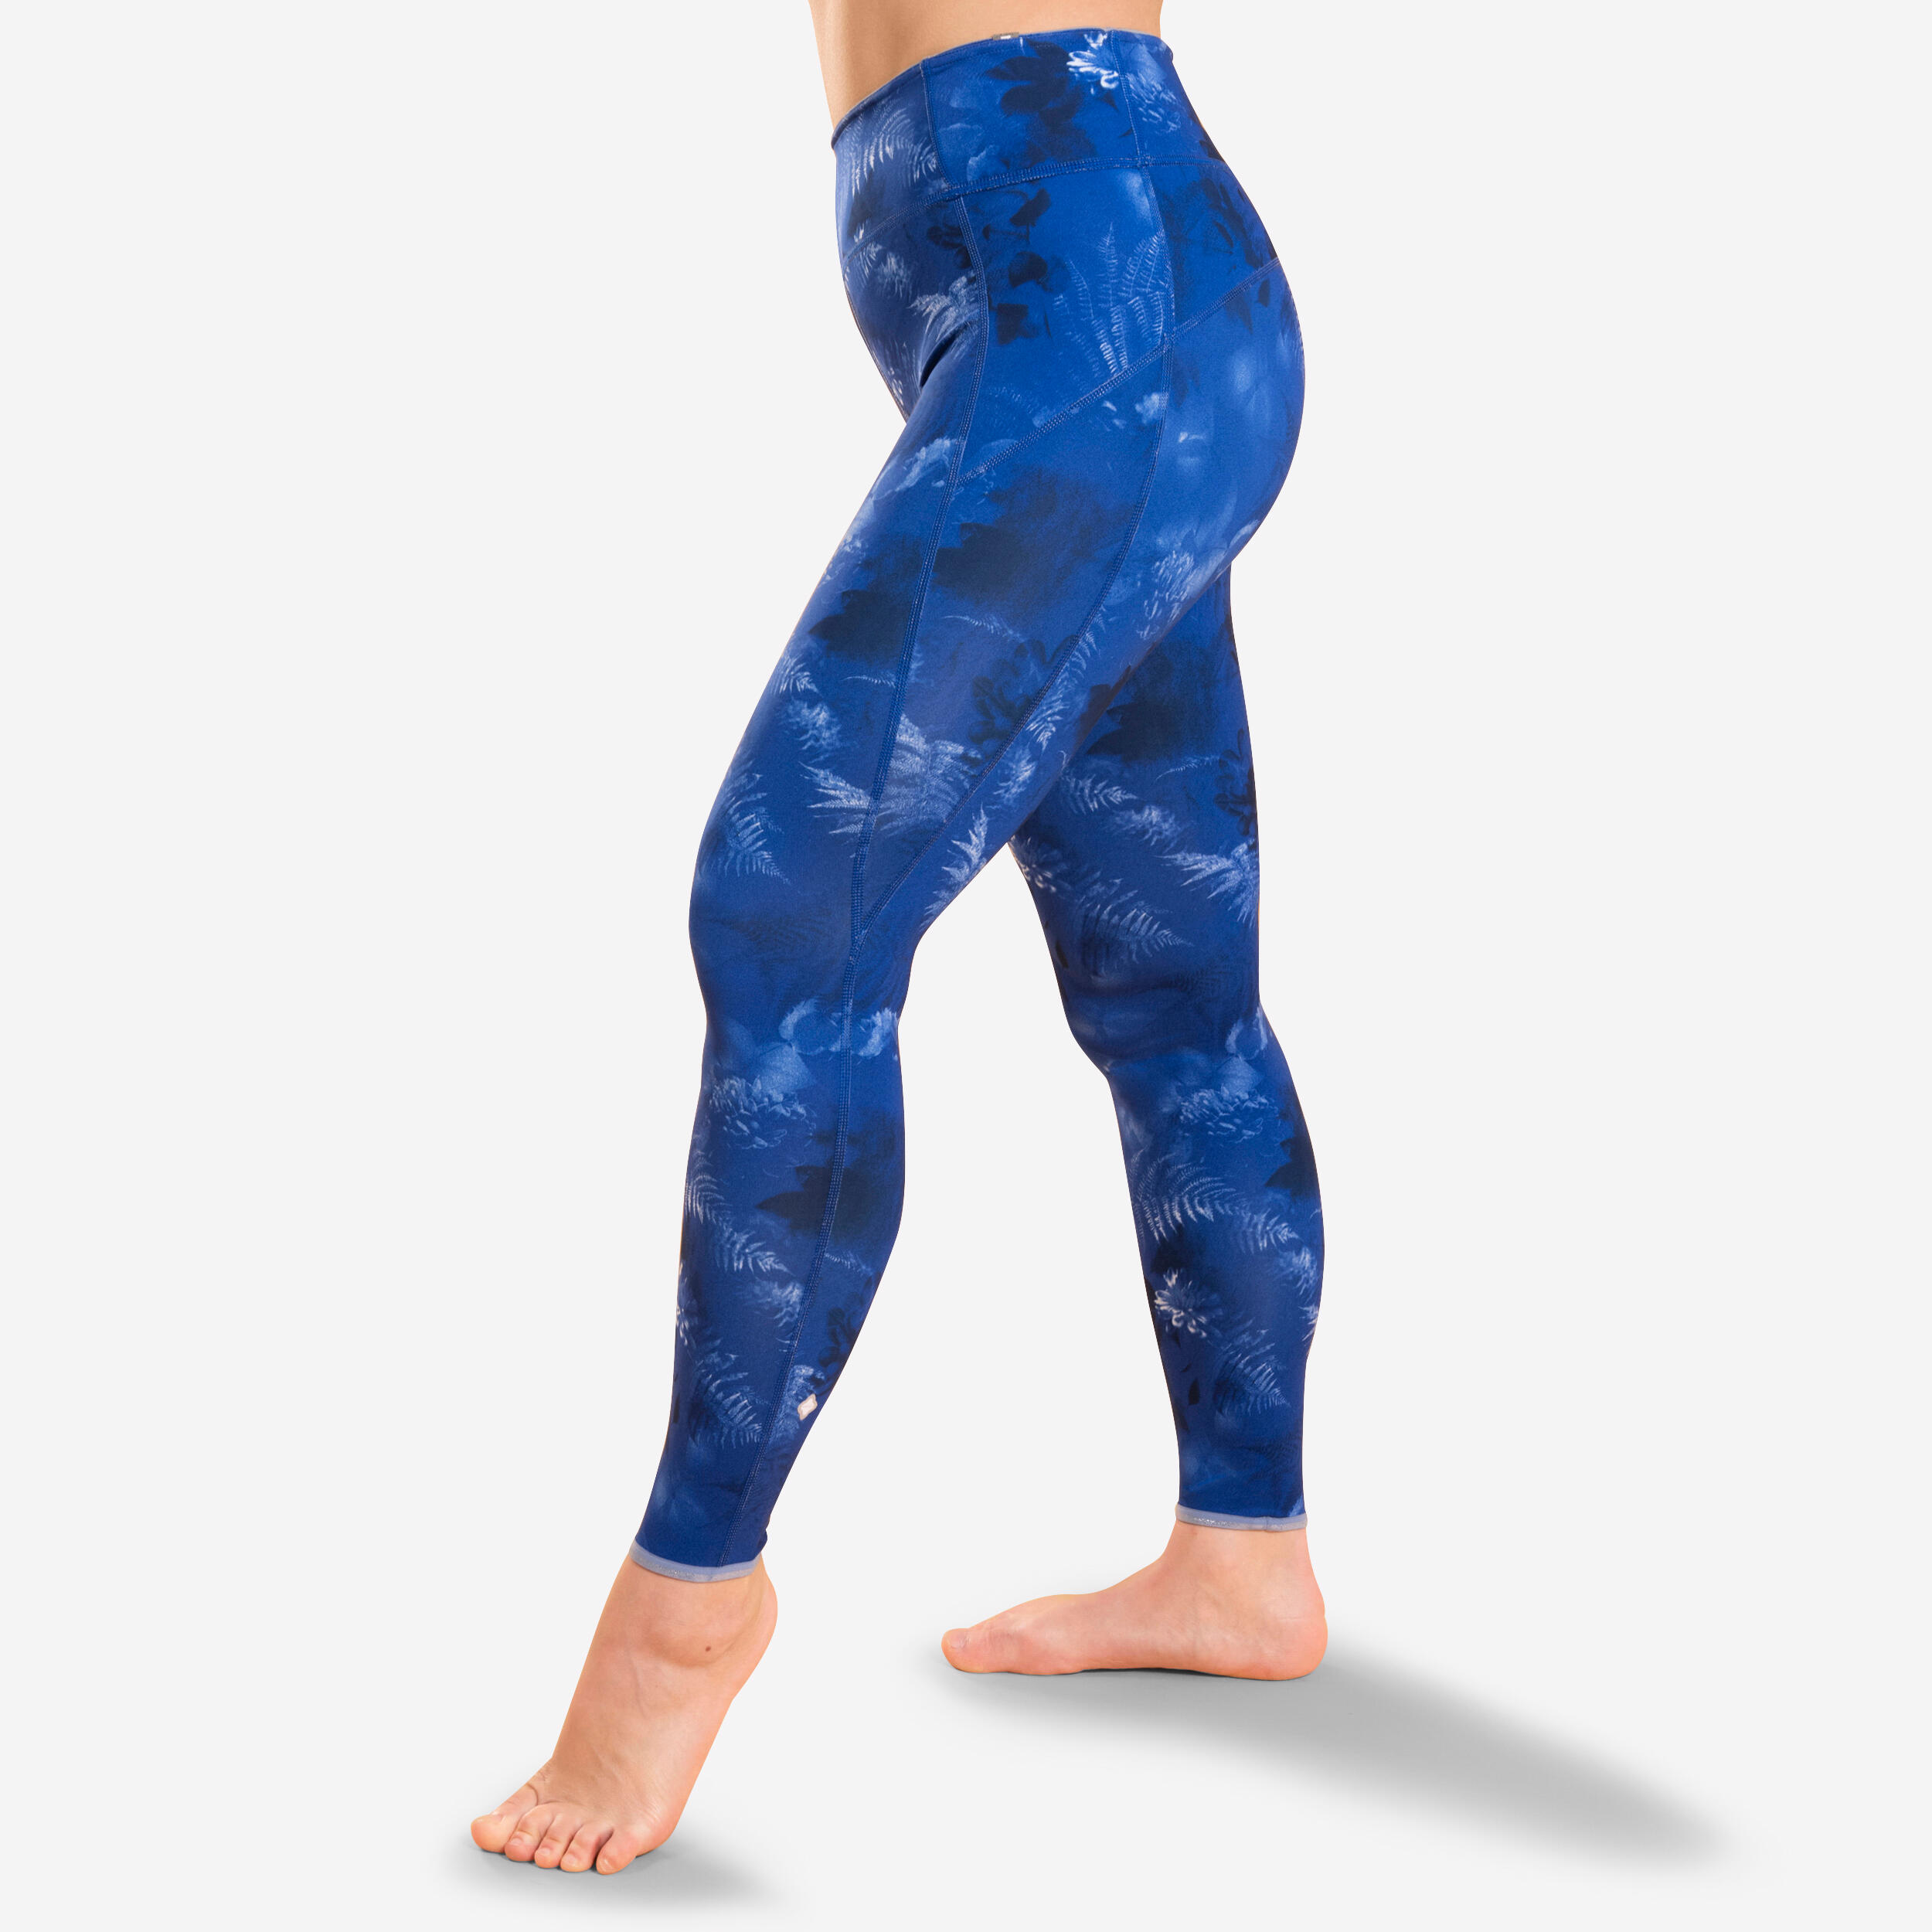 Workout Pants Women | Unique Printed Fitness Leggings • Brawny Line